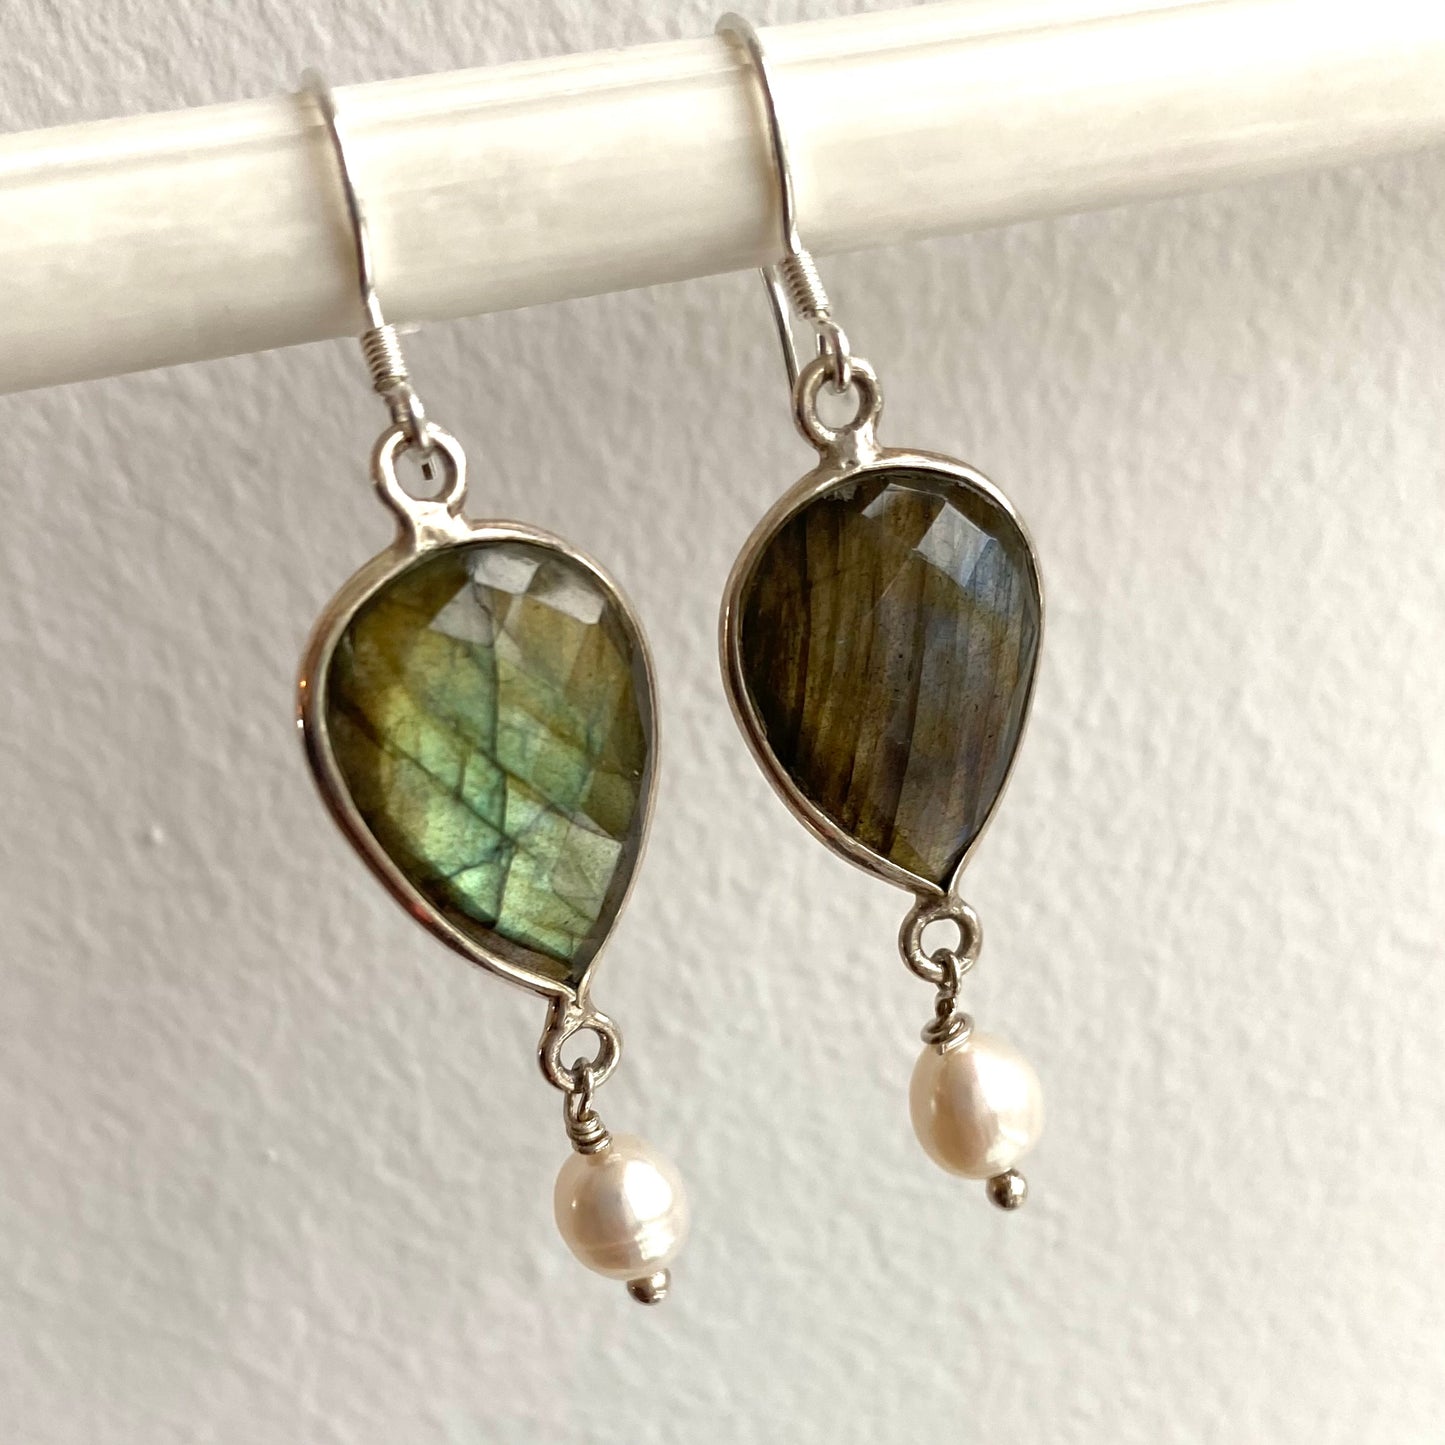 Labradorite and pearl earrings